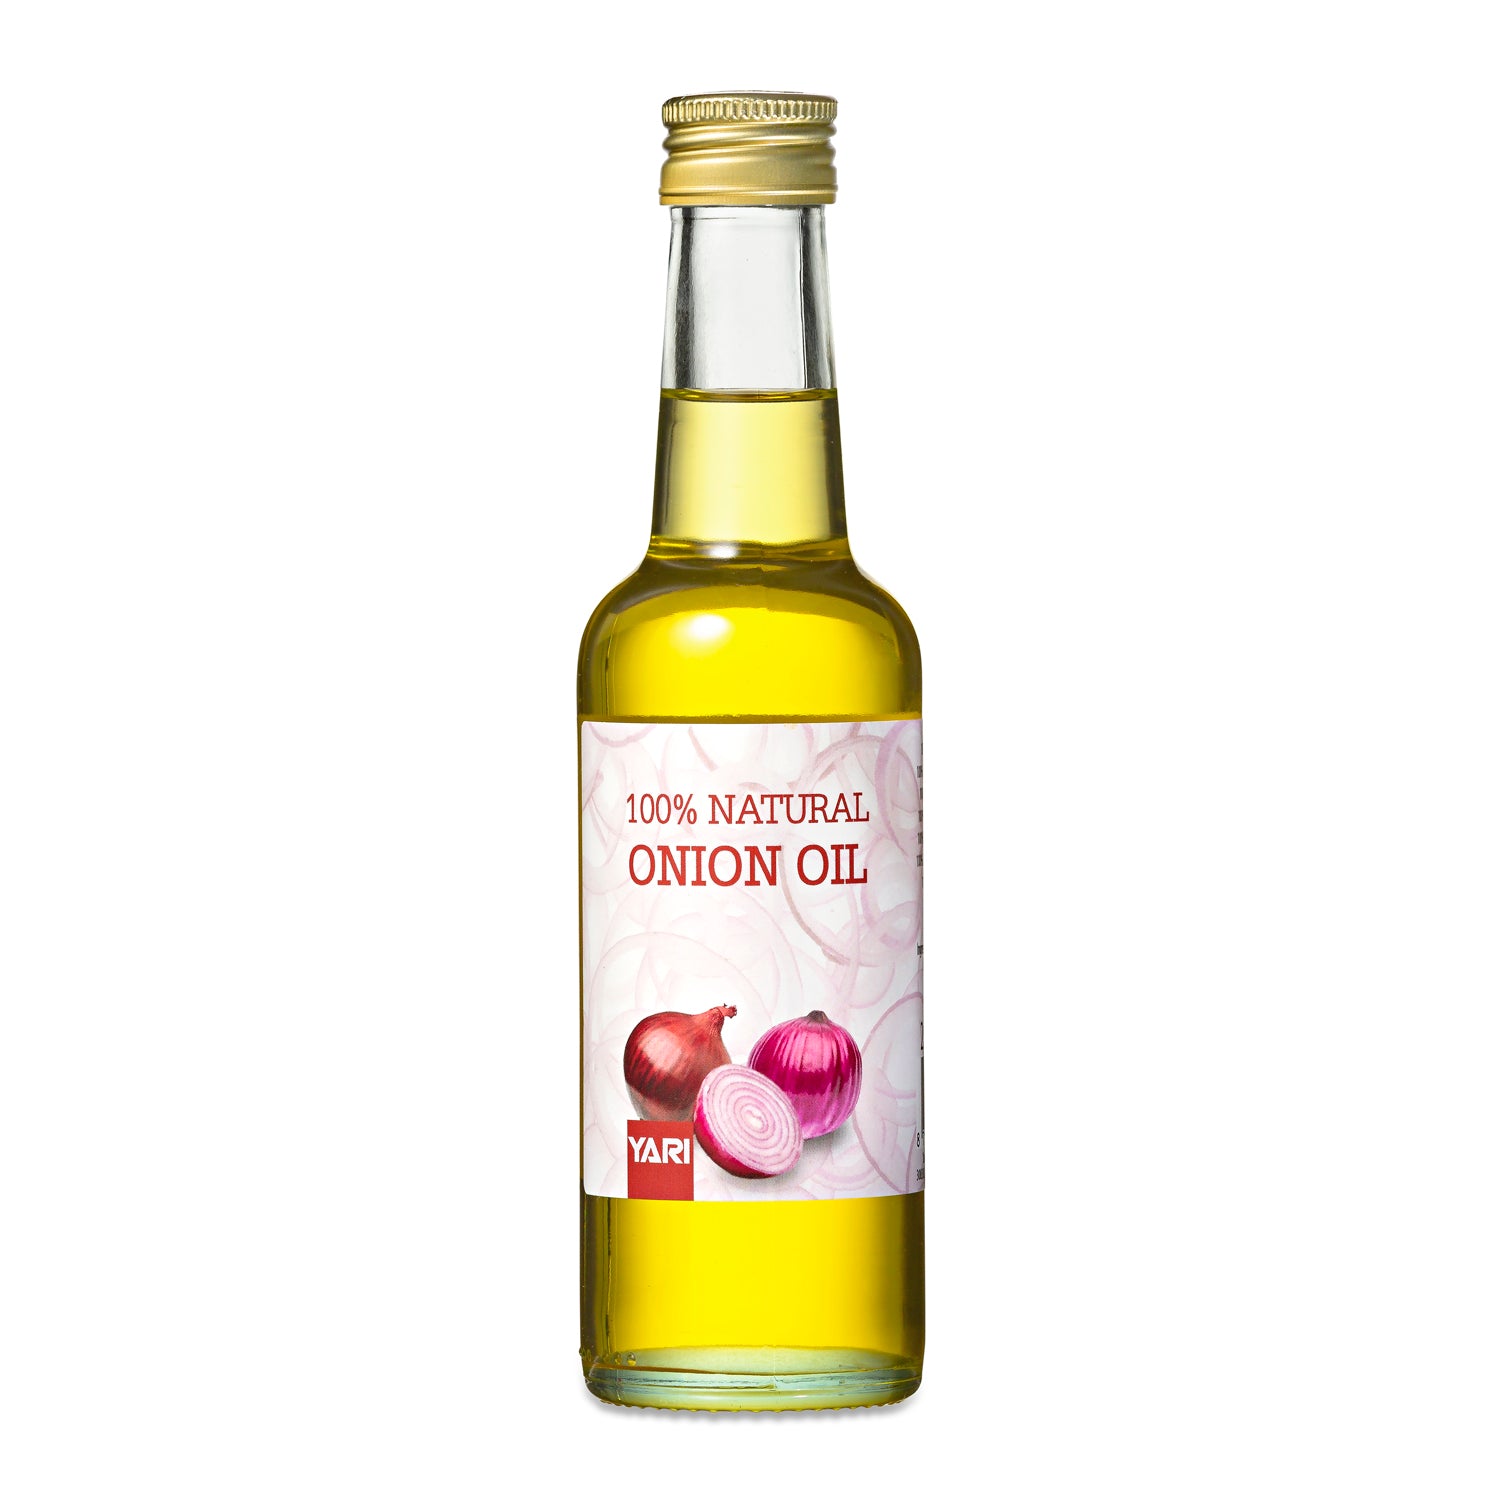 Yari - 100% Natural Onion Oil 250ml